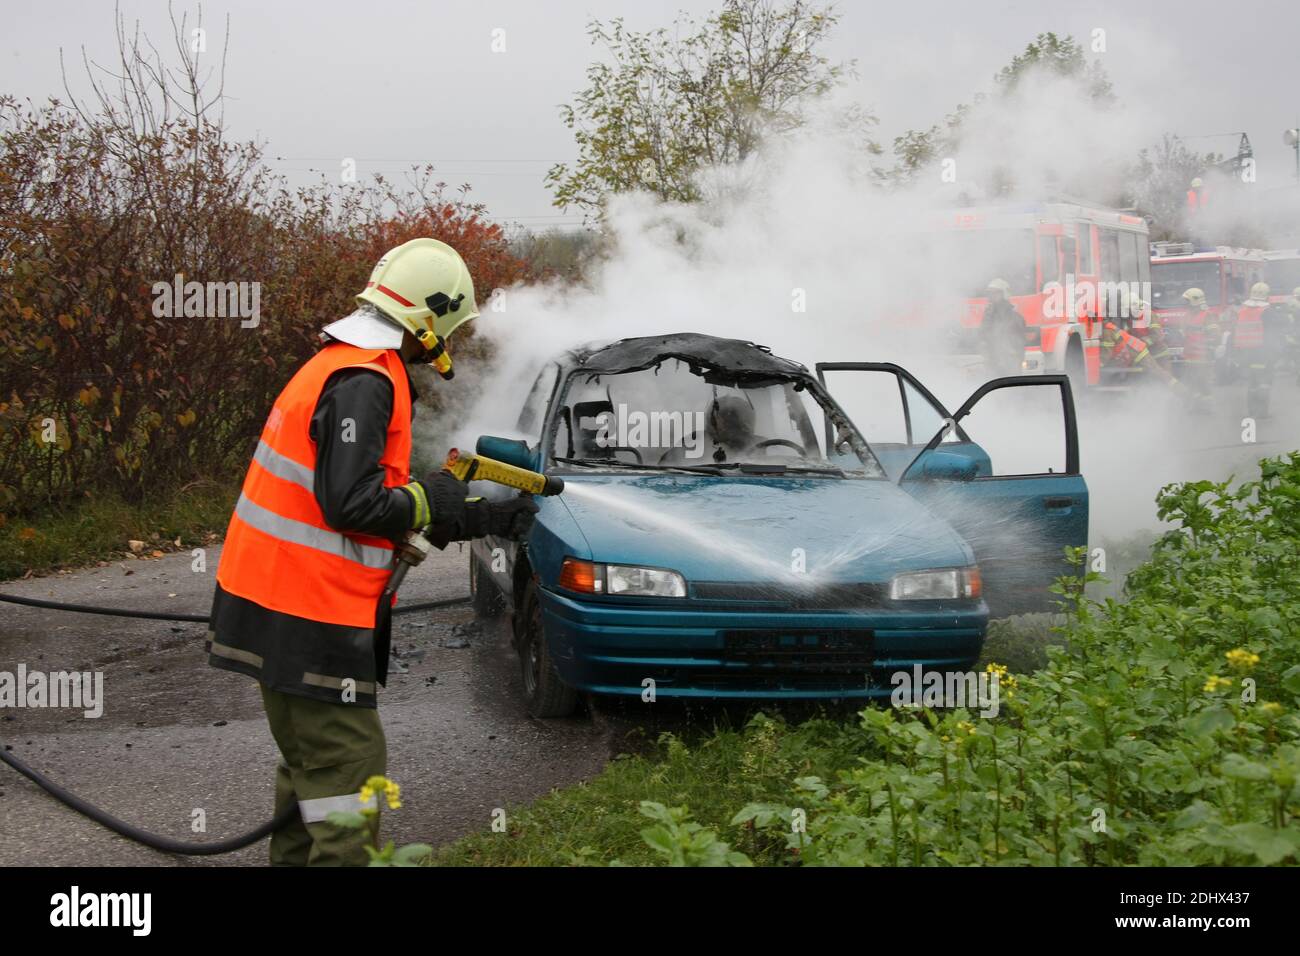 Feuerwehr loescht ein brennendes Auto, Verkehrsunfall, Banque D'Images